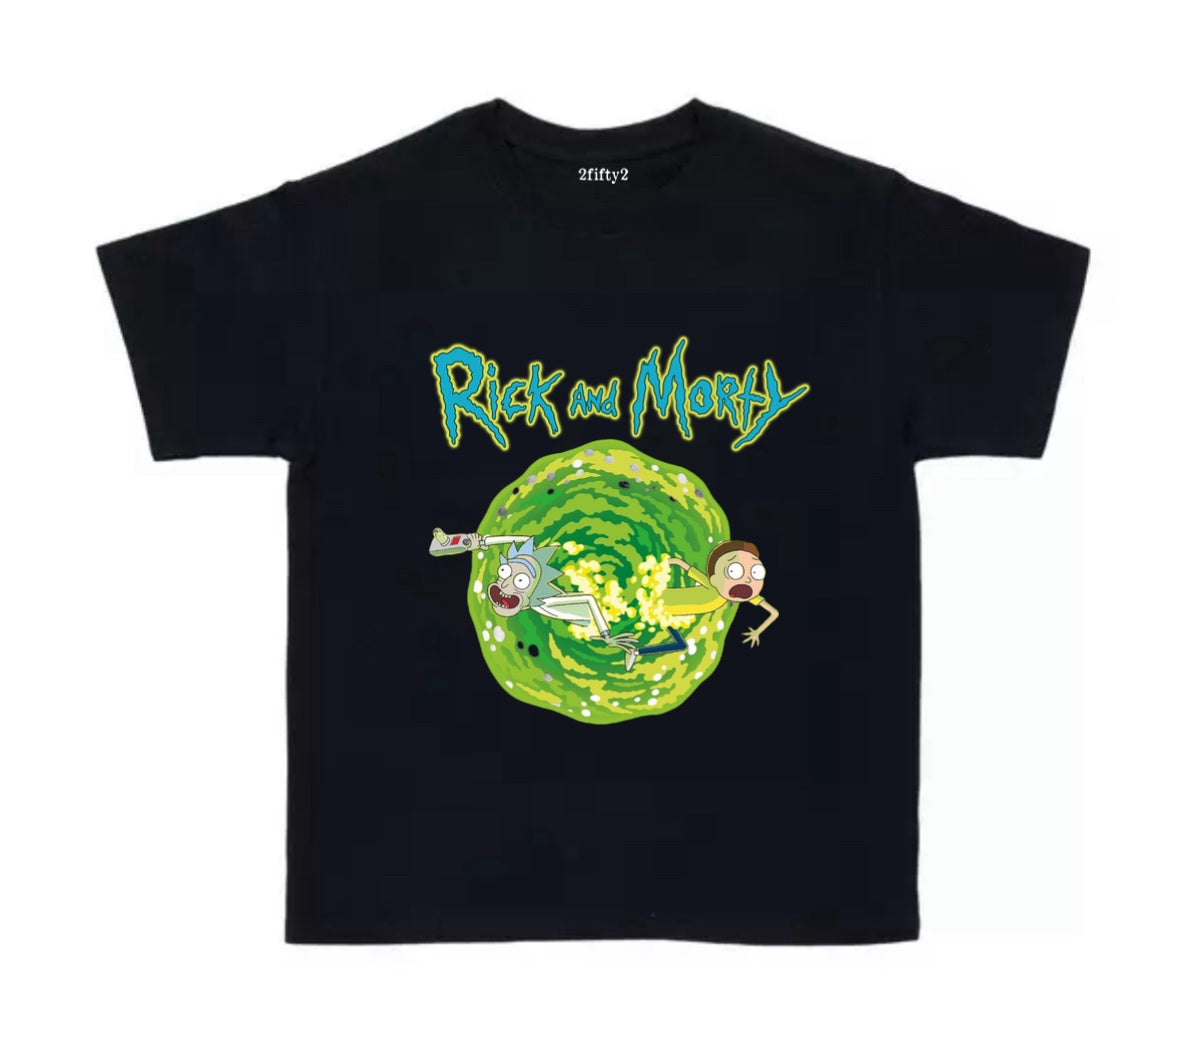 Graphic Rick and Morty tee shirt